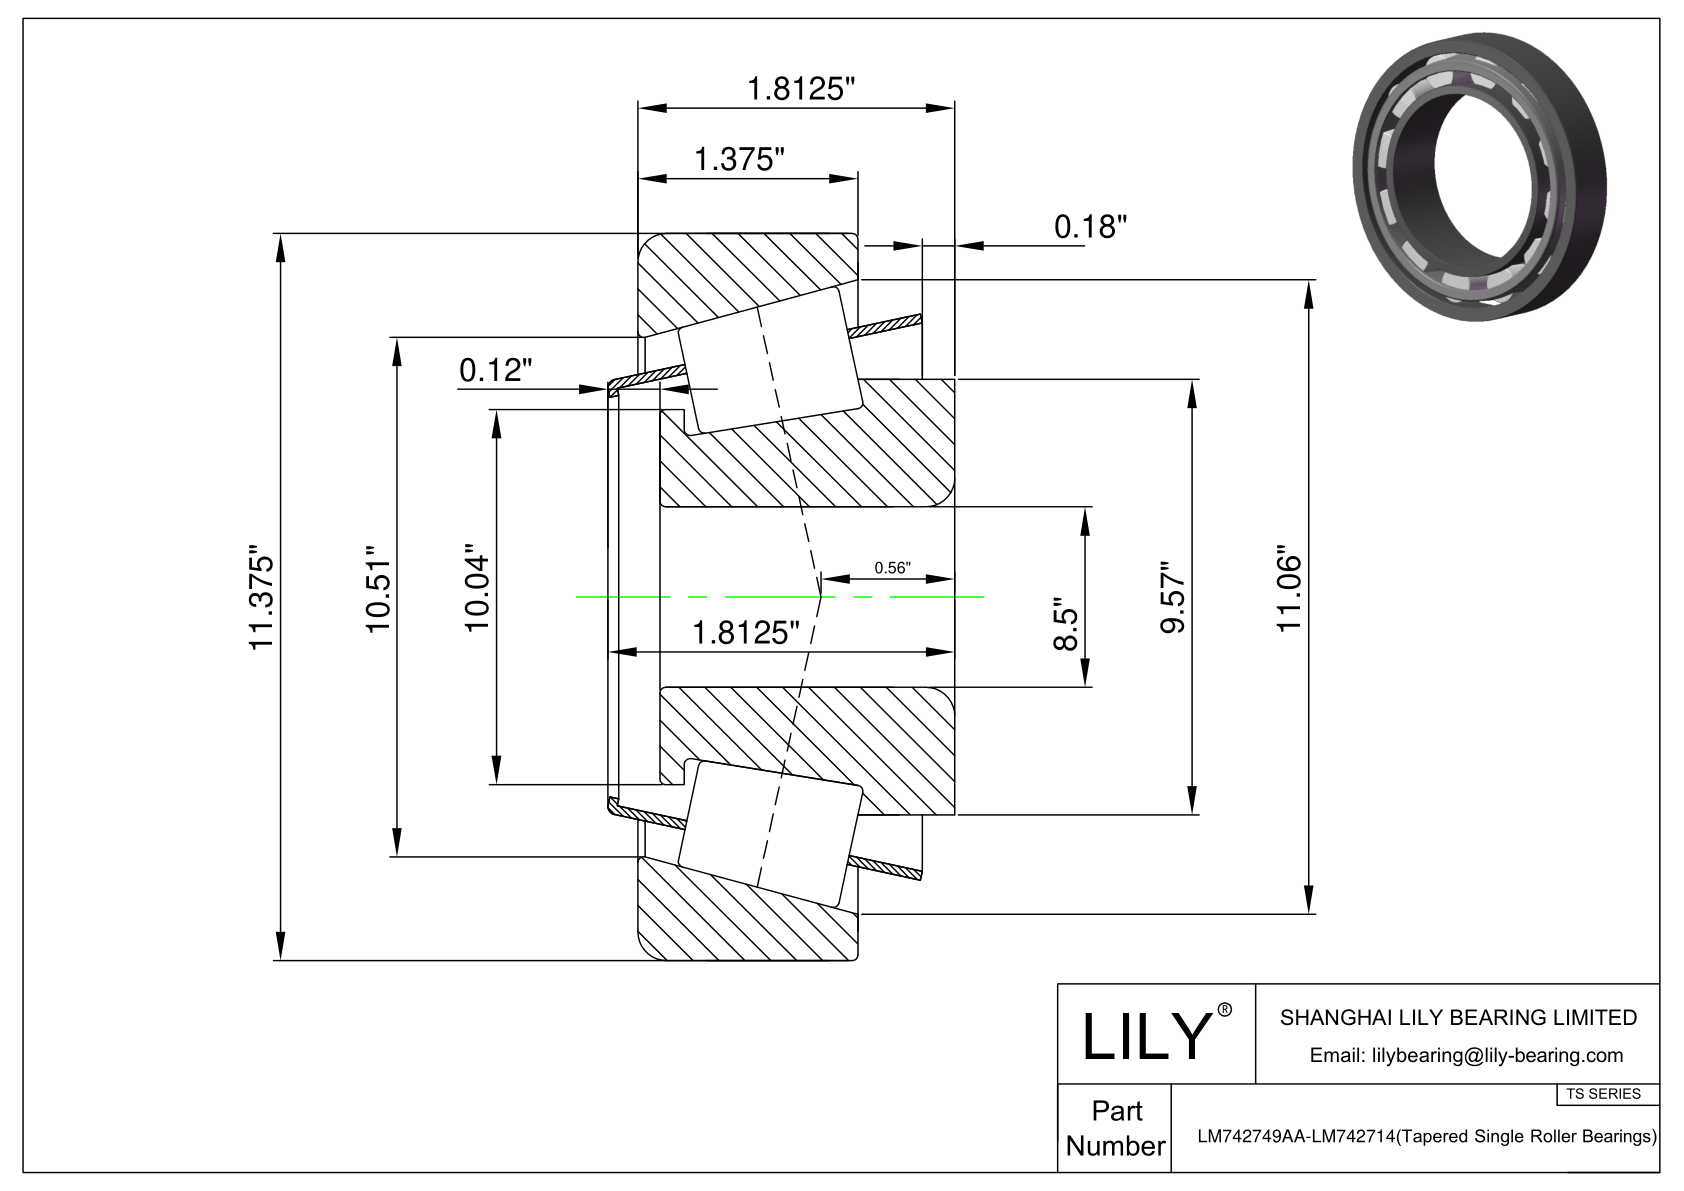 LM742749AA-LM742714 TS系列(圆锥单滚子轴承)(英制) CAD图形